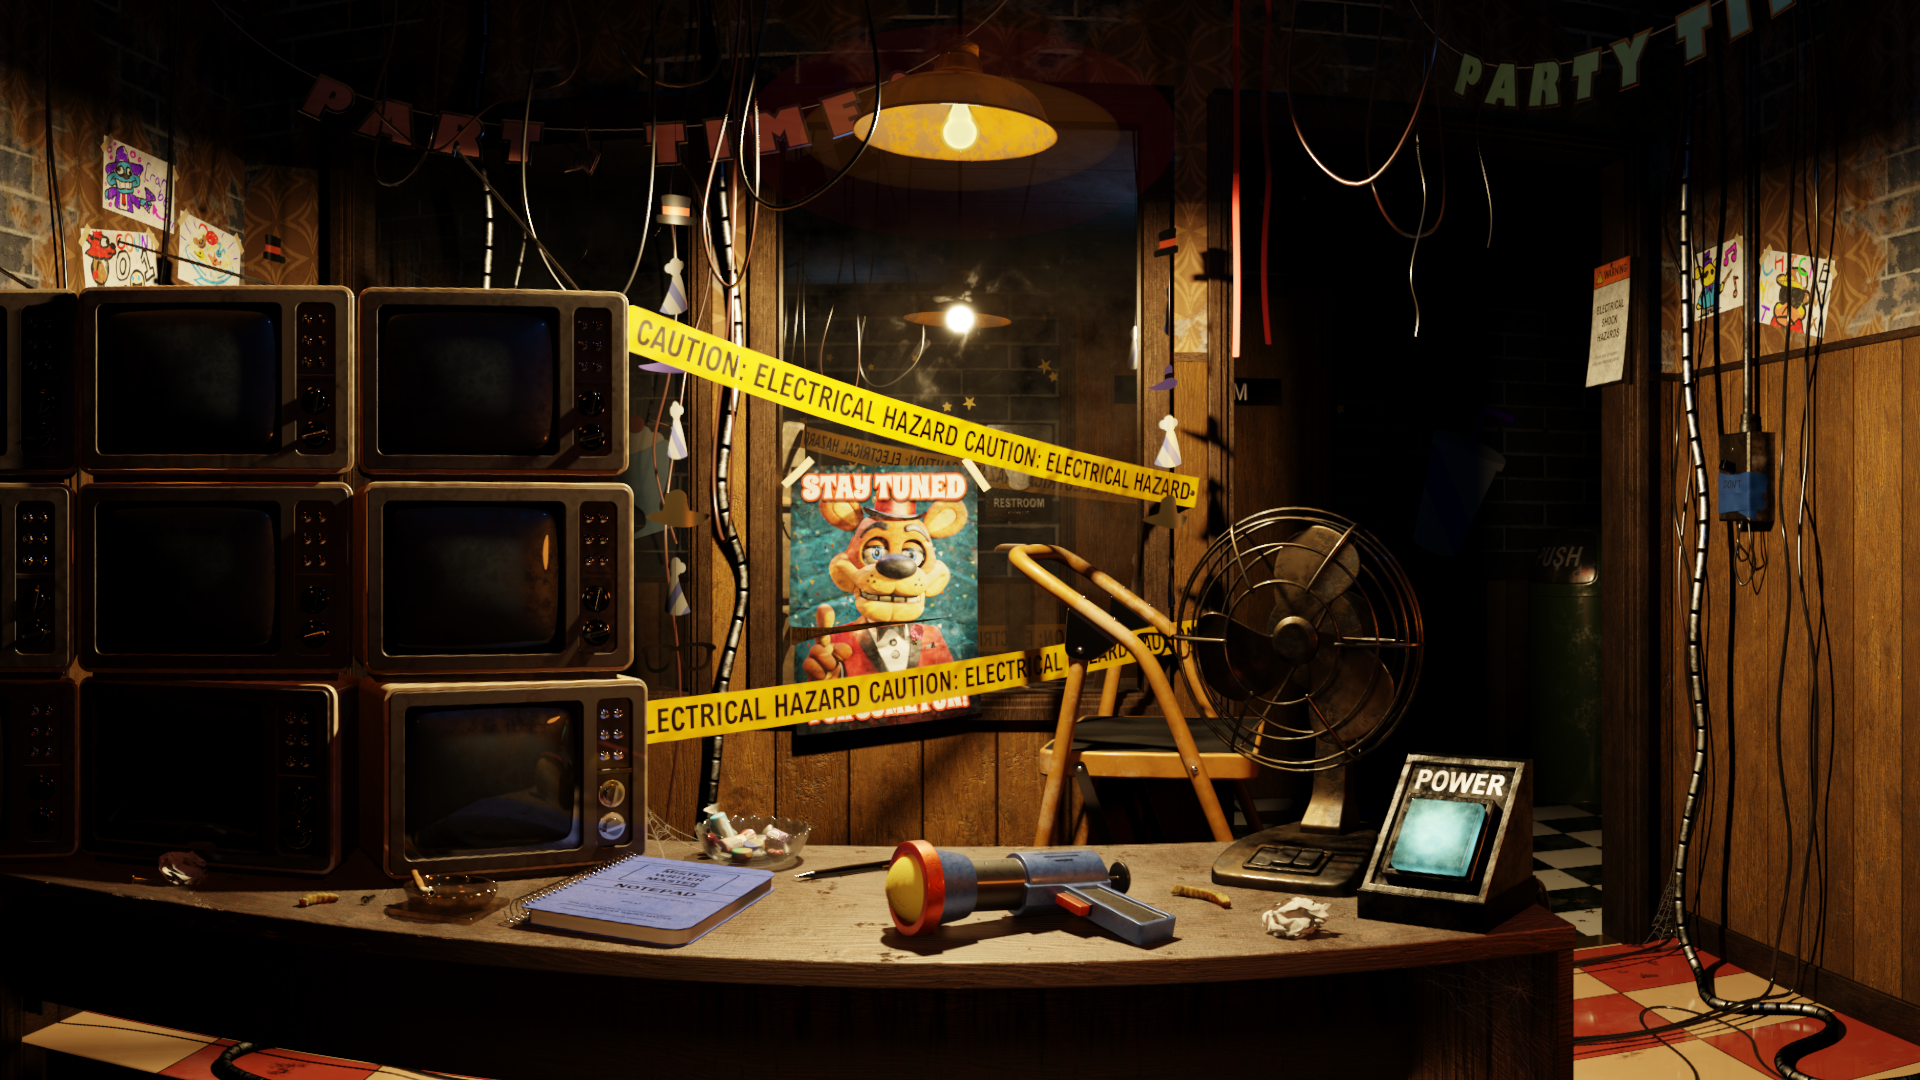 PC / Computer - Five Nights at Freddy's 2 - Cutscenes - The